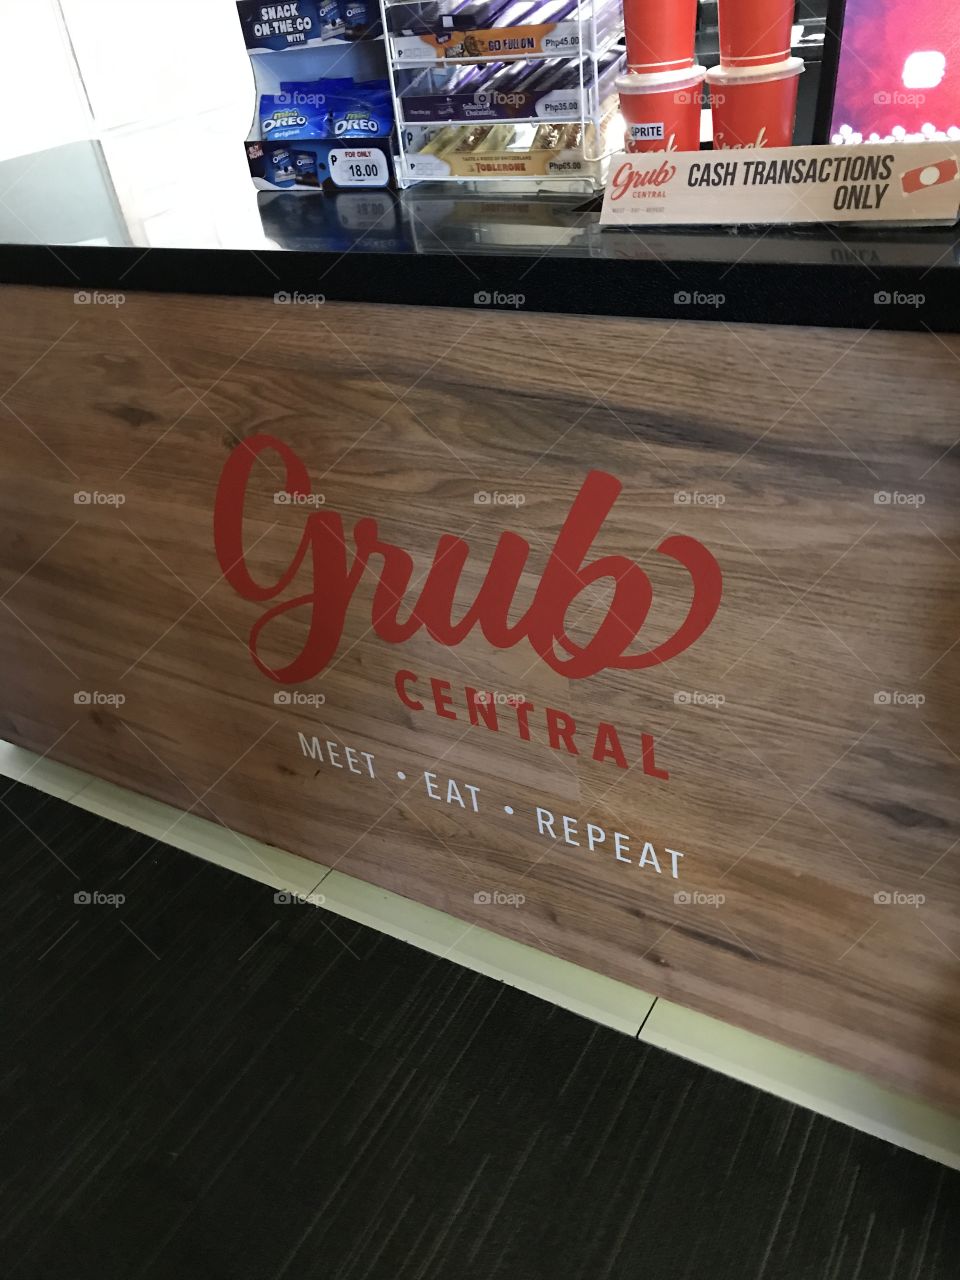 Grub Central